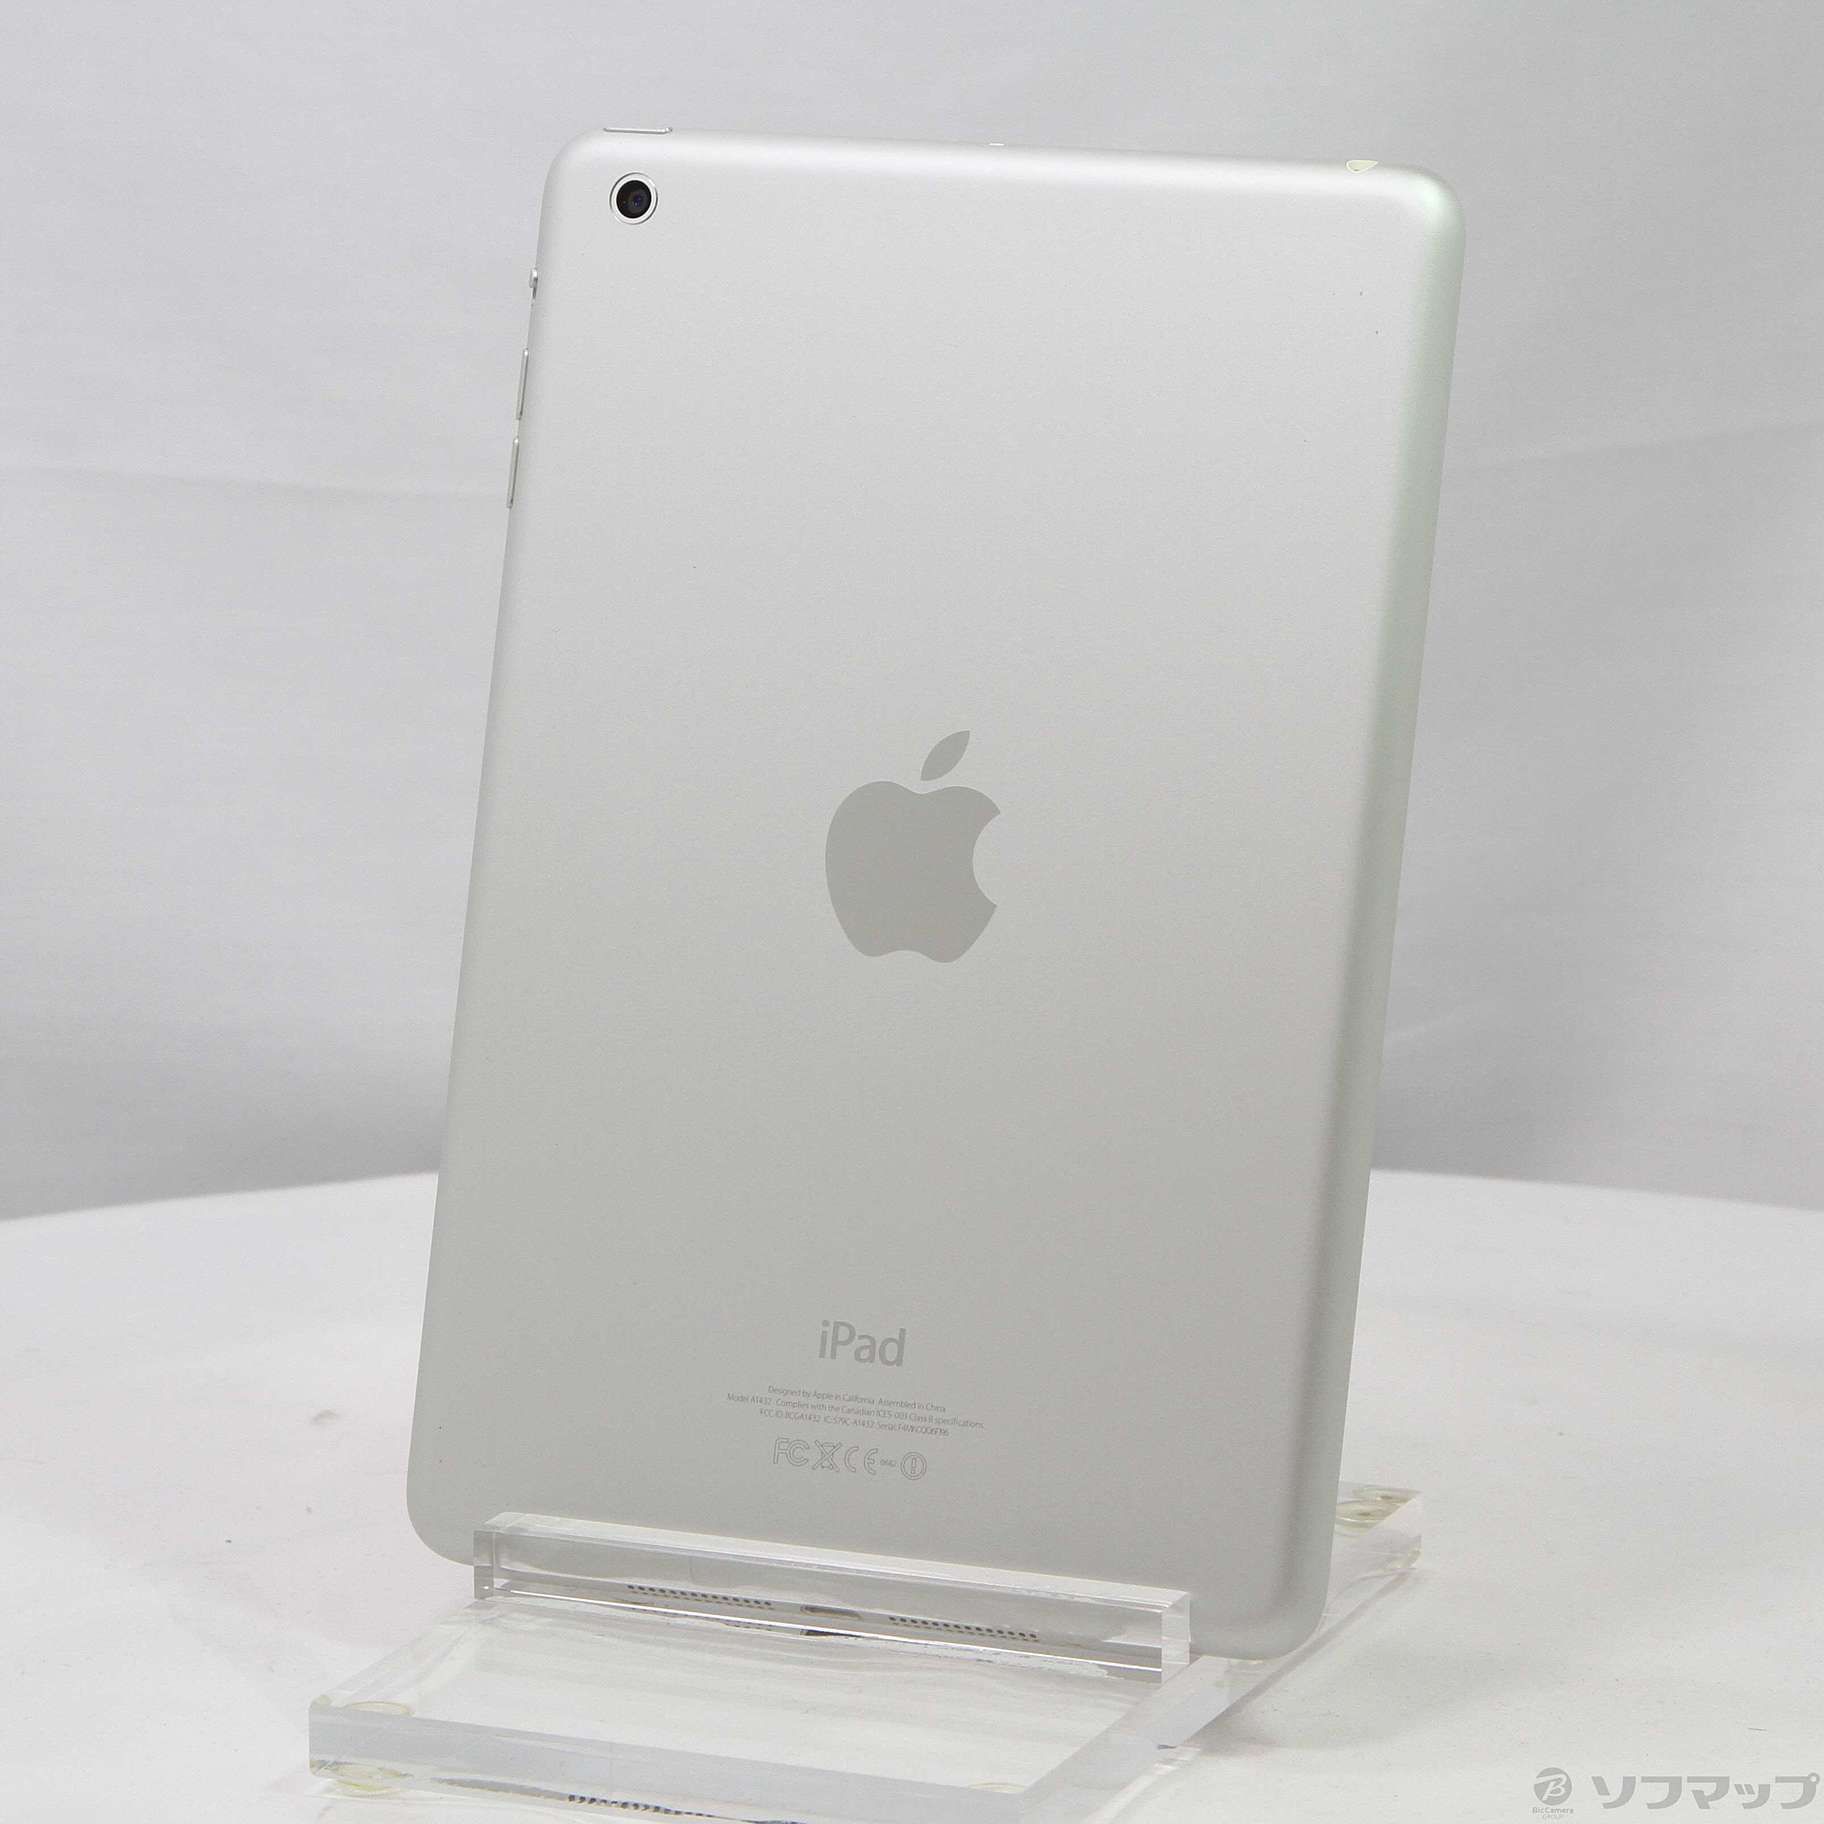 iPad mini wi-fi 16GB White MD531J/Aタブレット